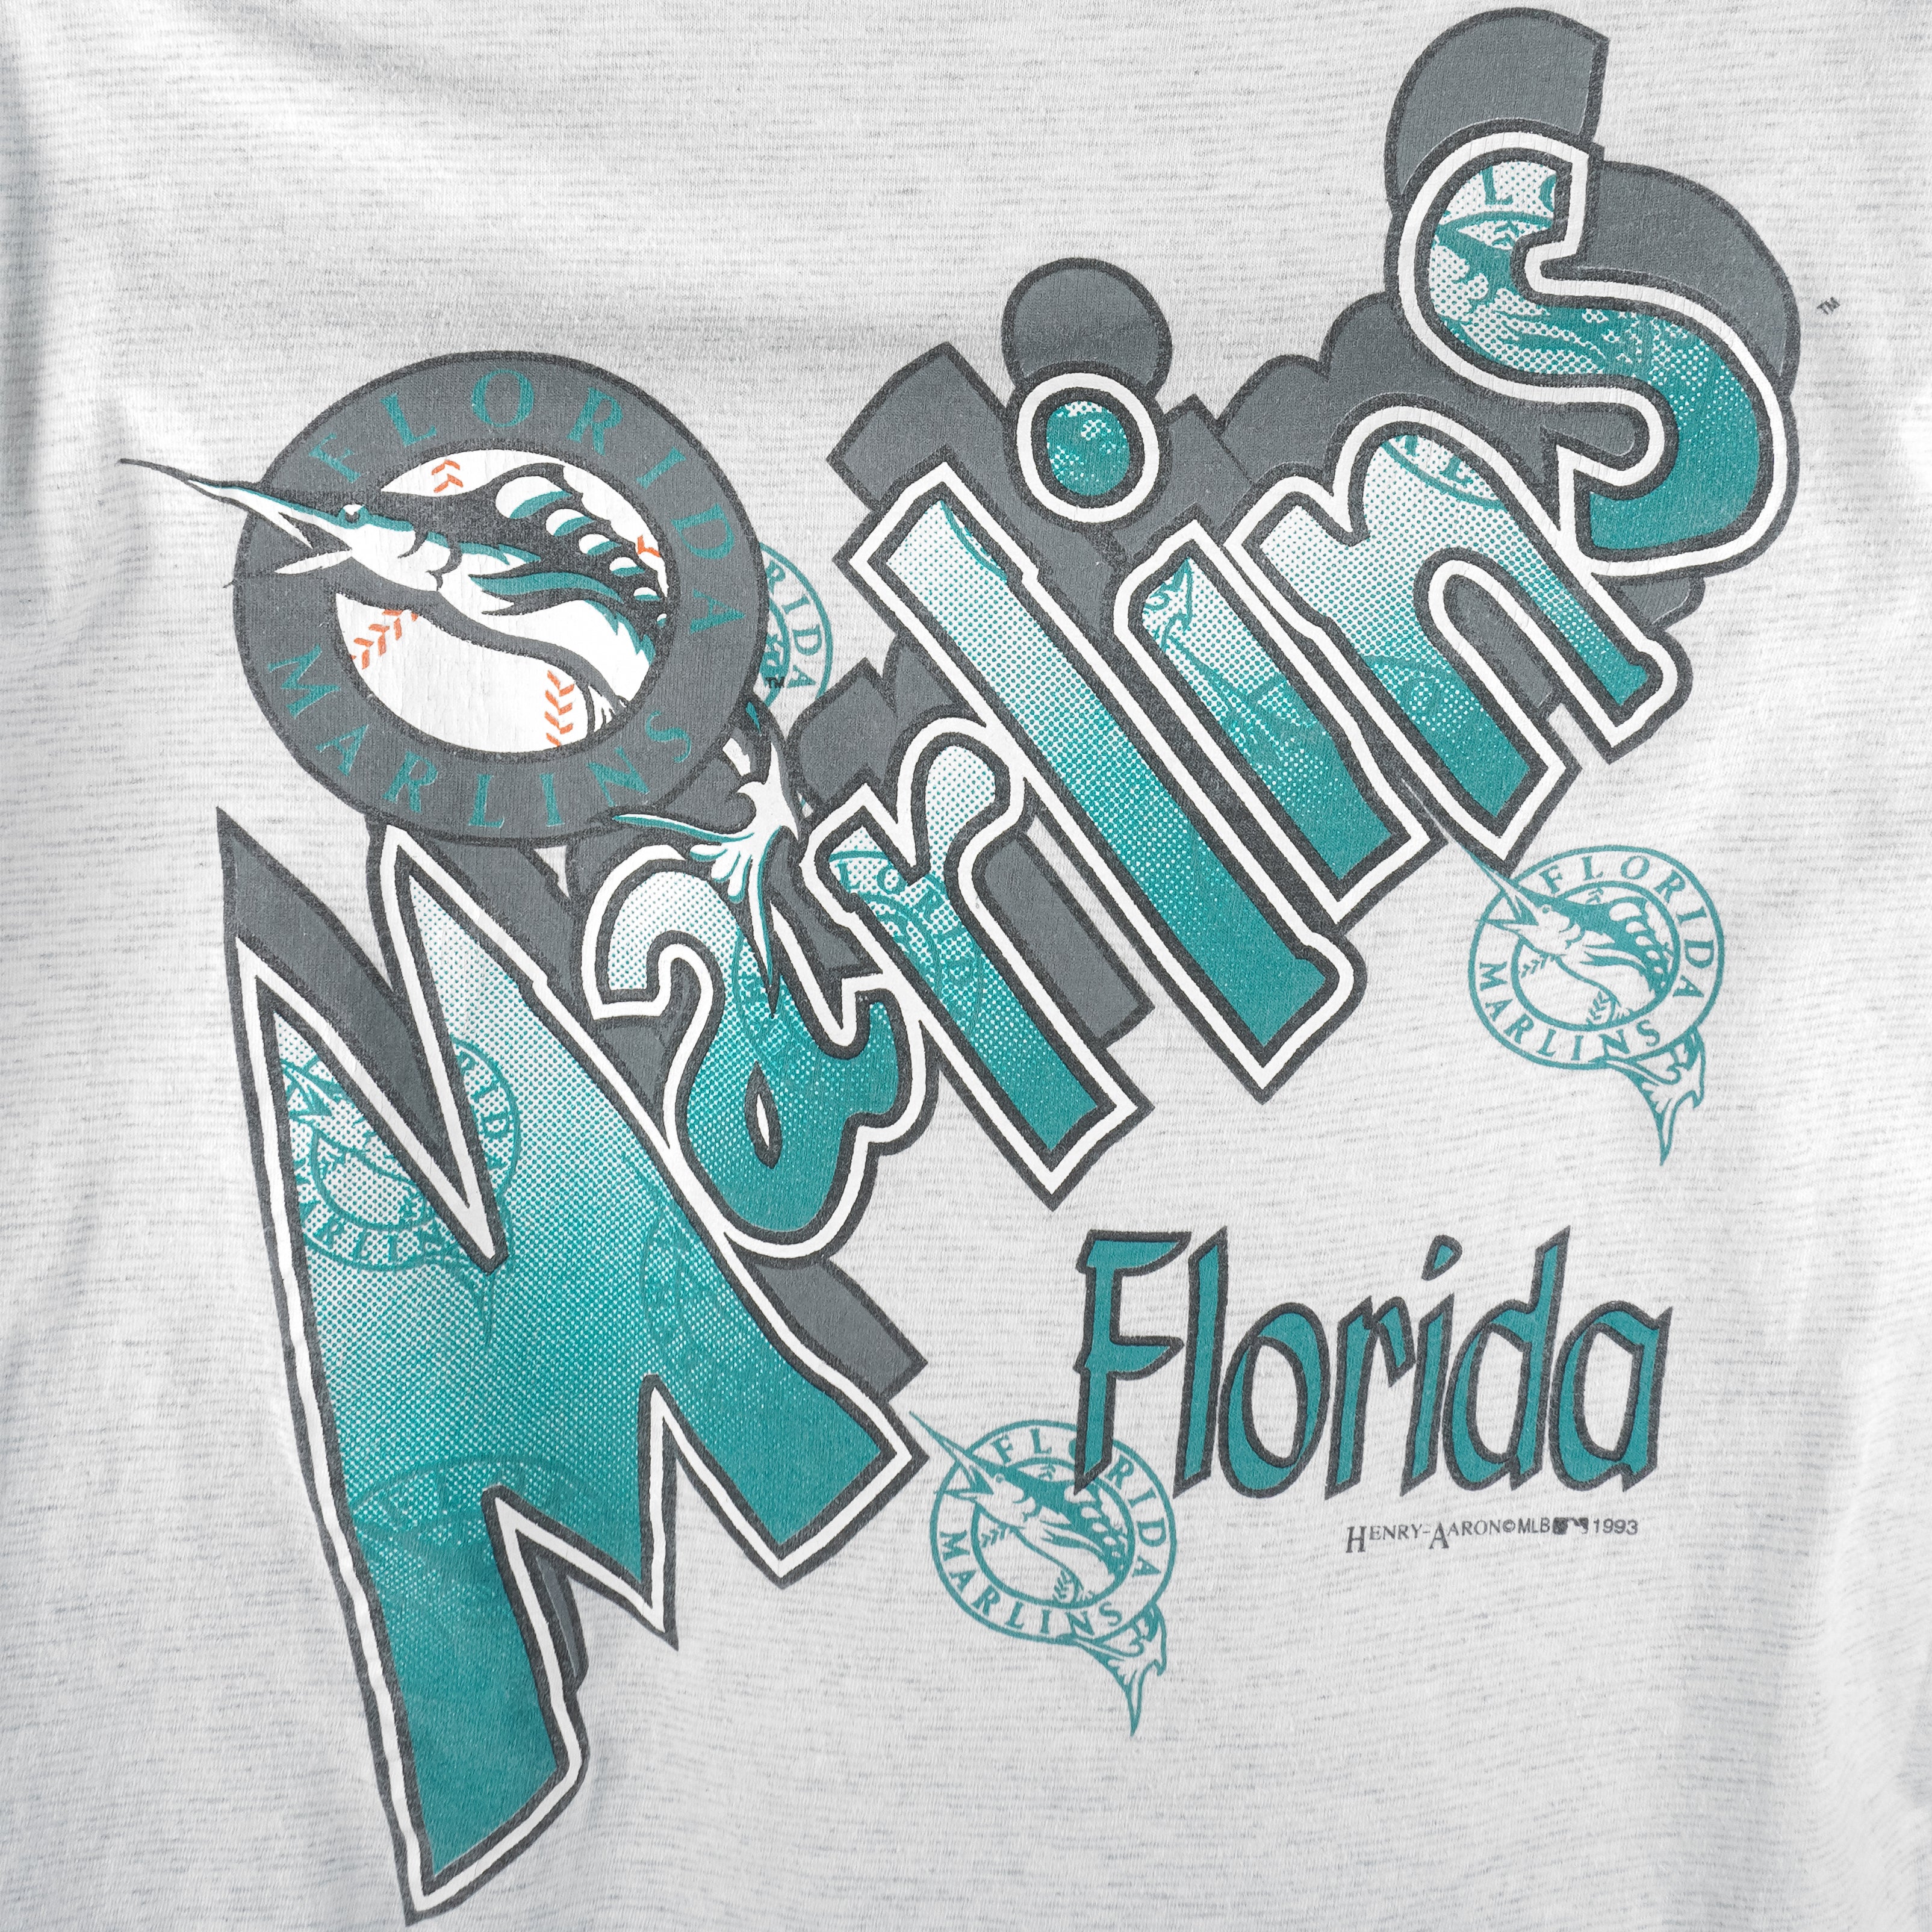 Vintage MLB (Mendez) - Florida Marlins Single Stitch T-Shirt 1993 Large